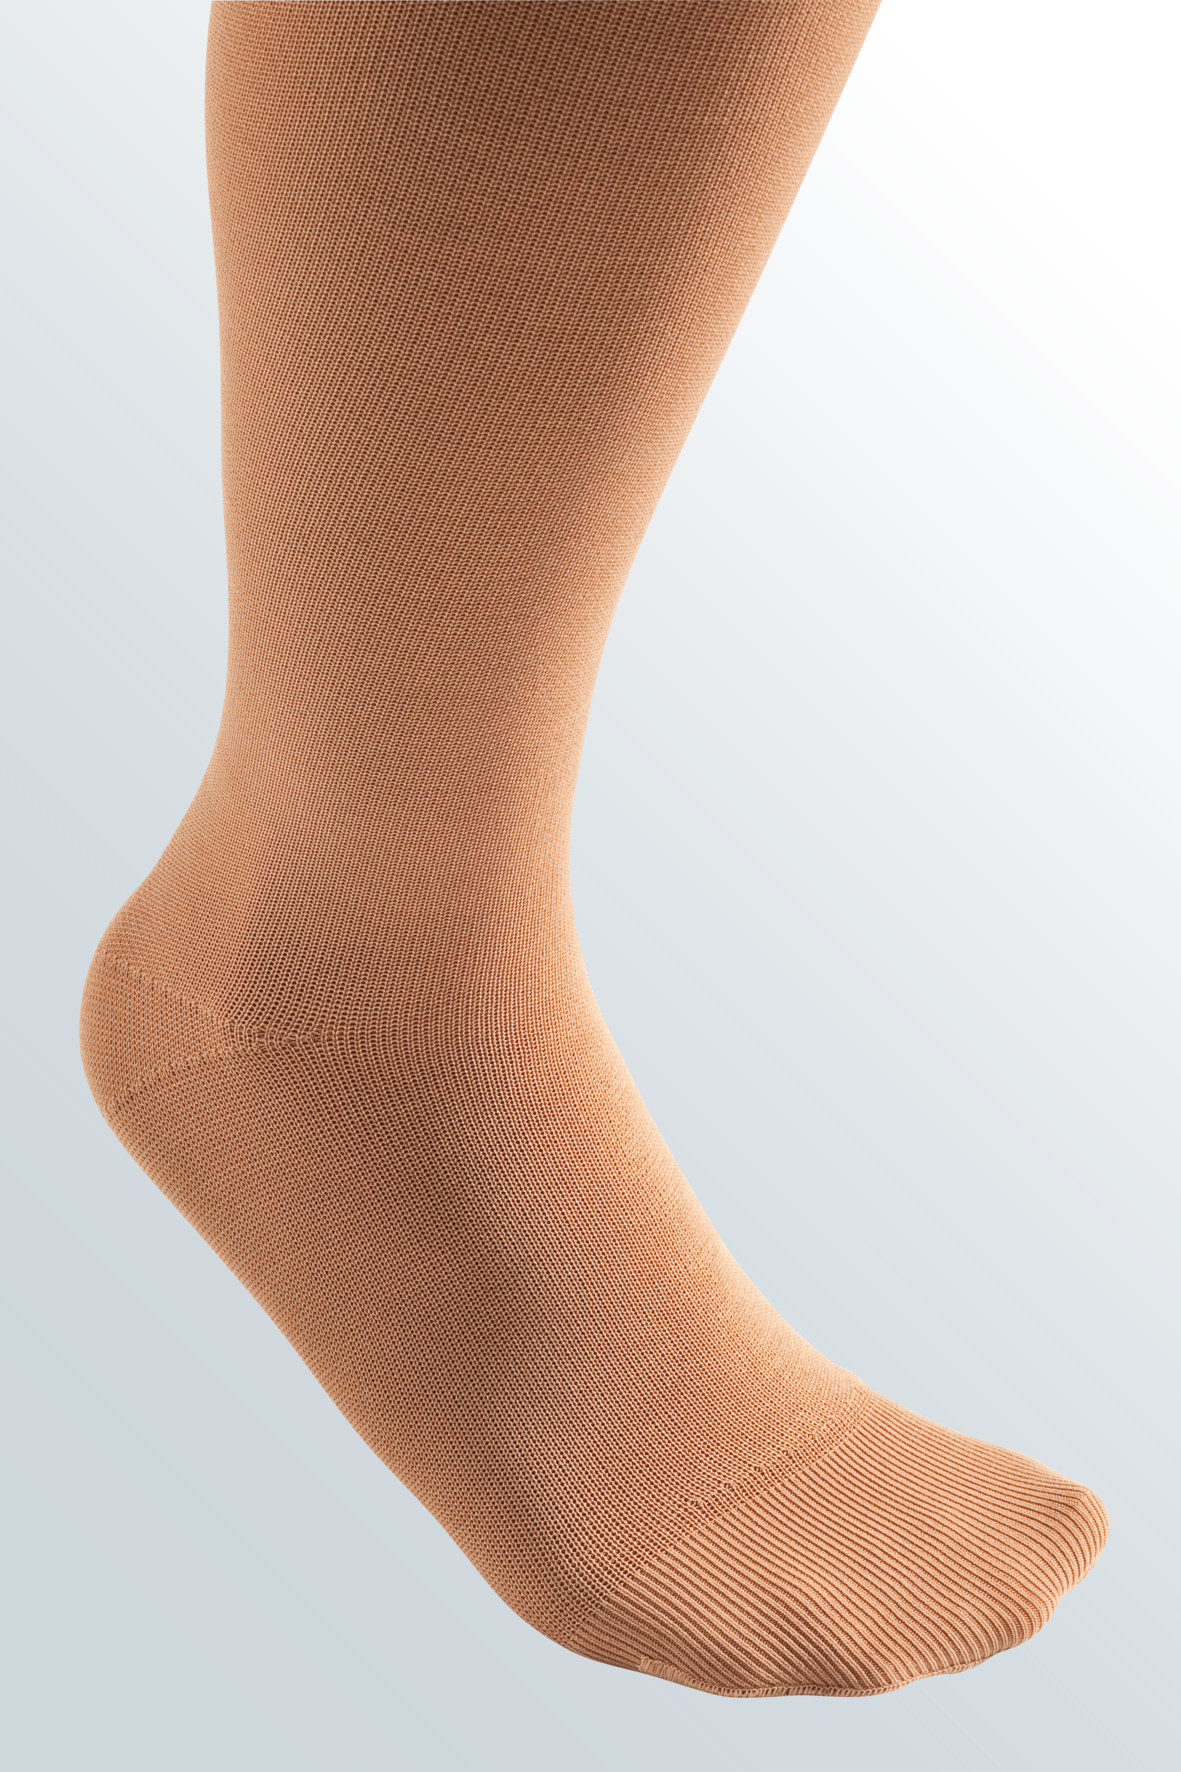 Mediven KneeHigh Compression Stockings - Black